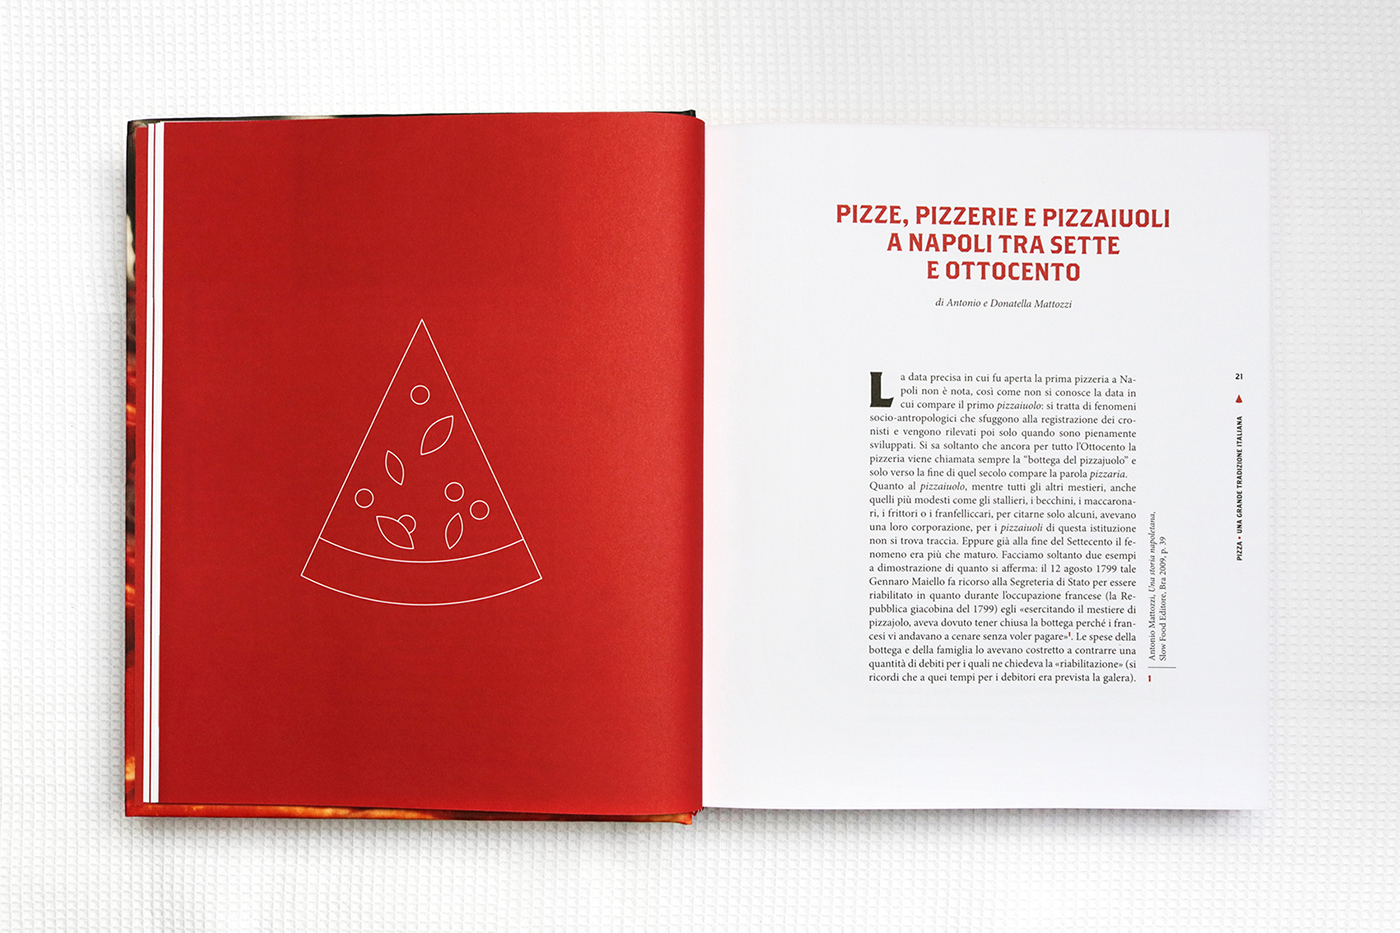 Pizza book slow food virgillo italian cooking kitchen cookbook recipes Cook Book